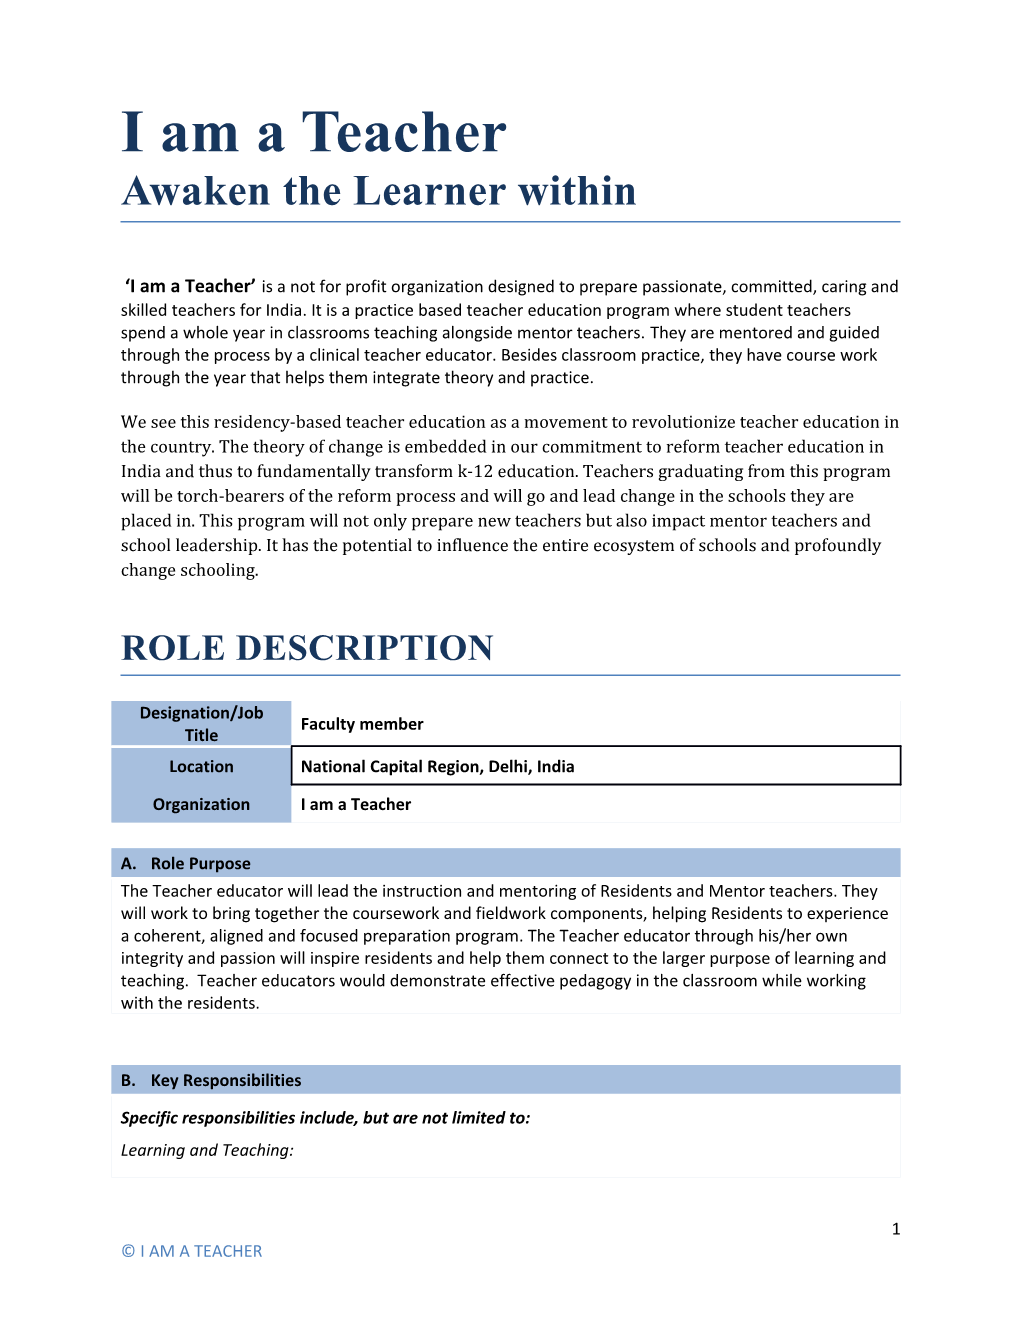 I Am a Teacher Awaken the Learner Within